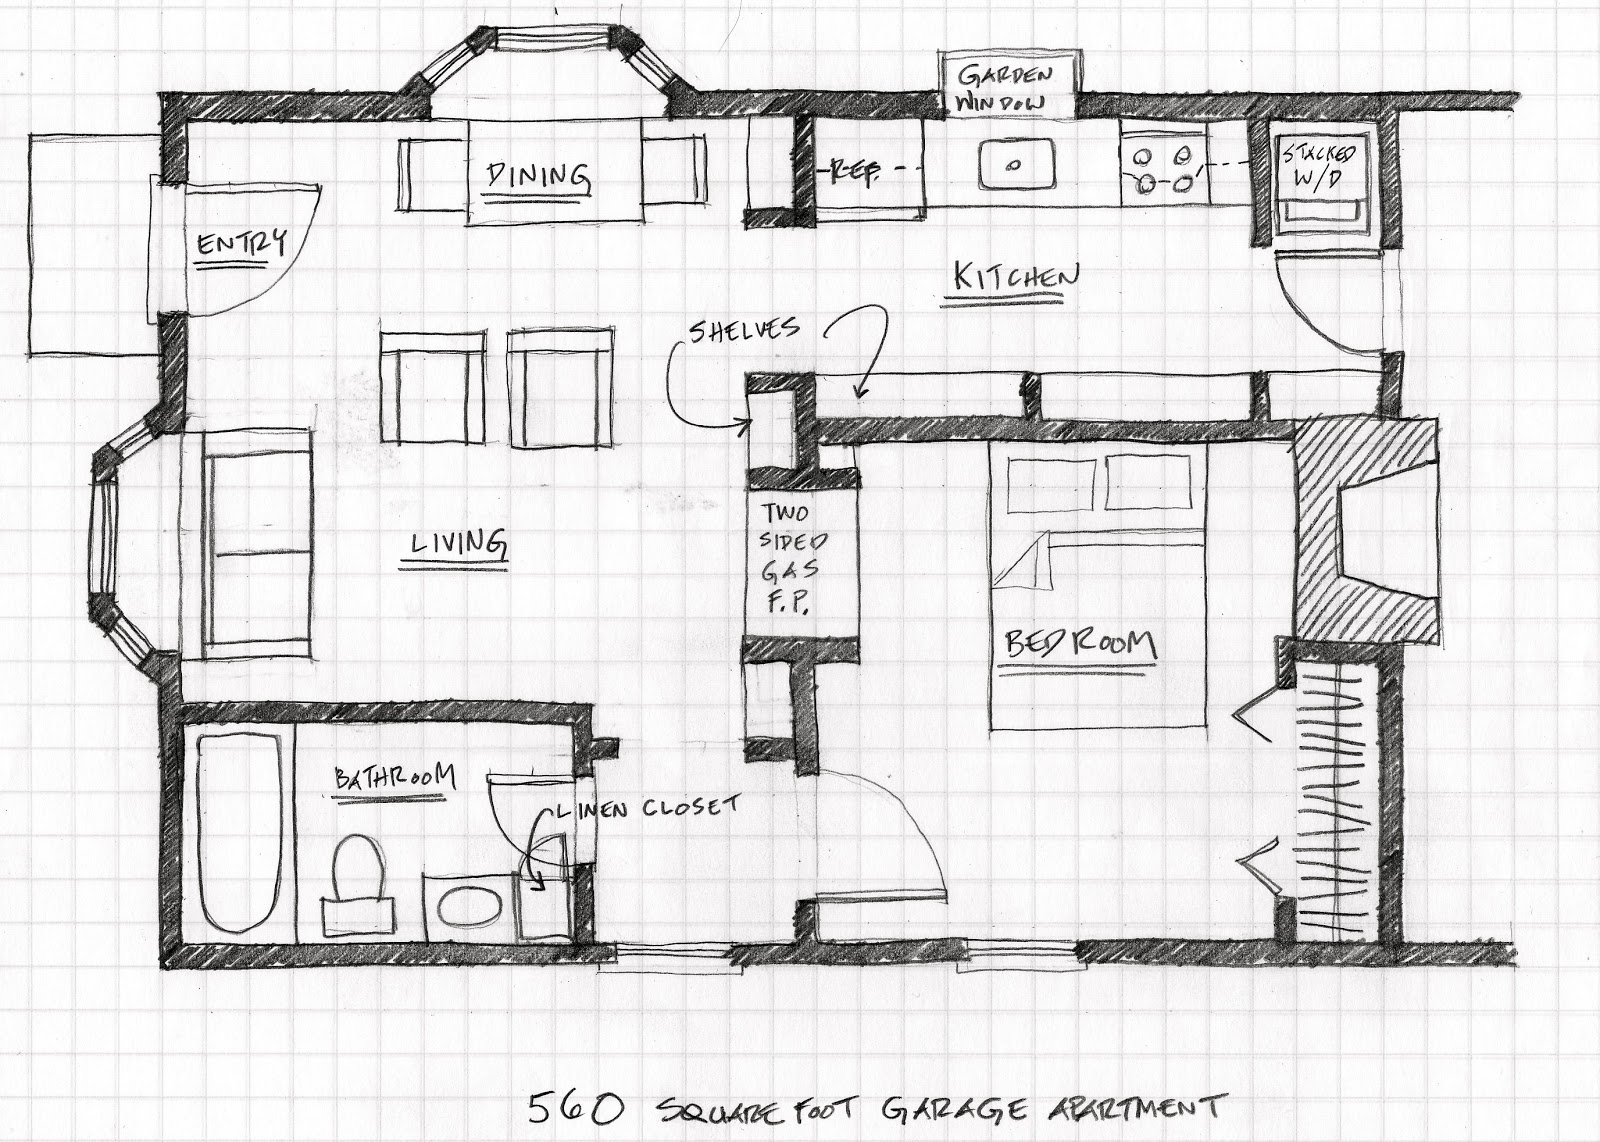 2 Bedroom Garage Apartment House Plans